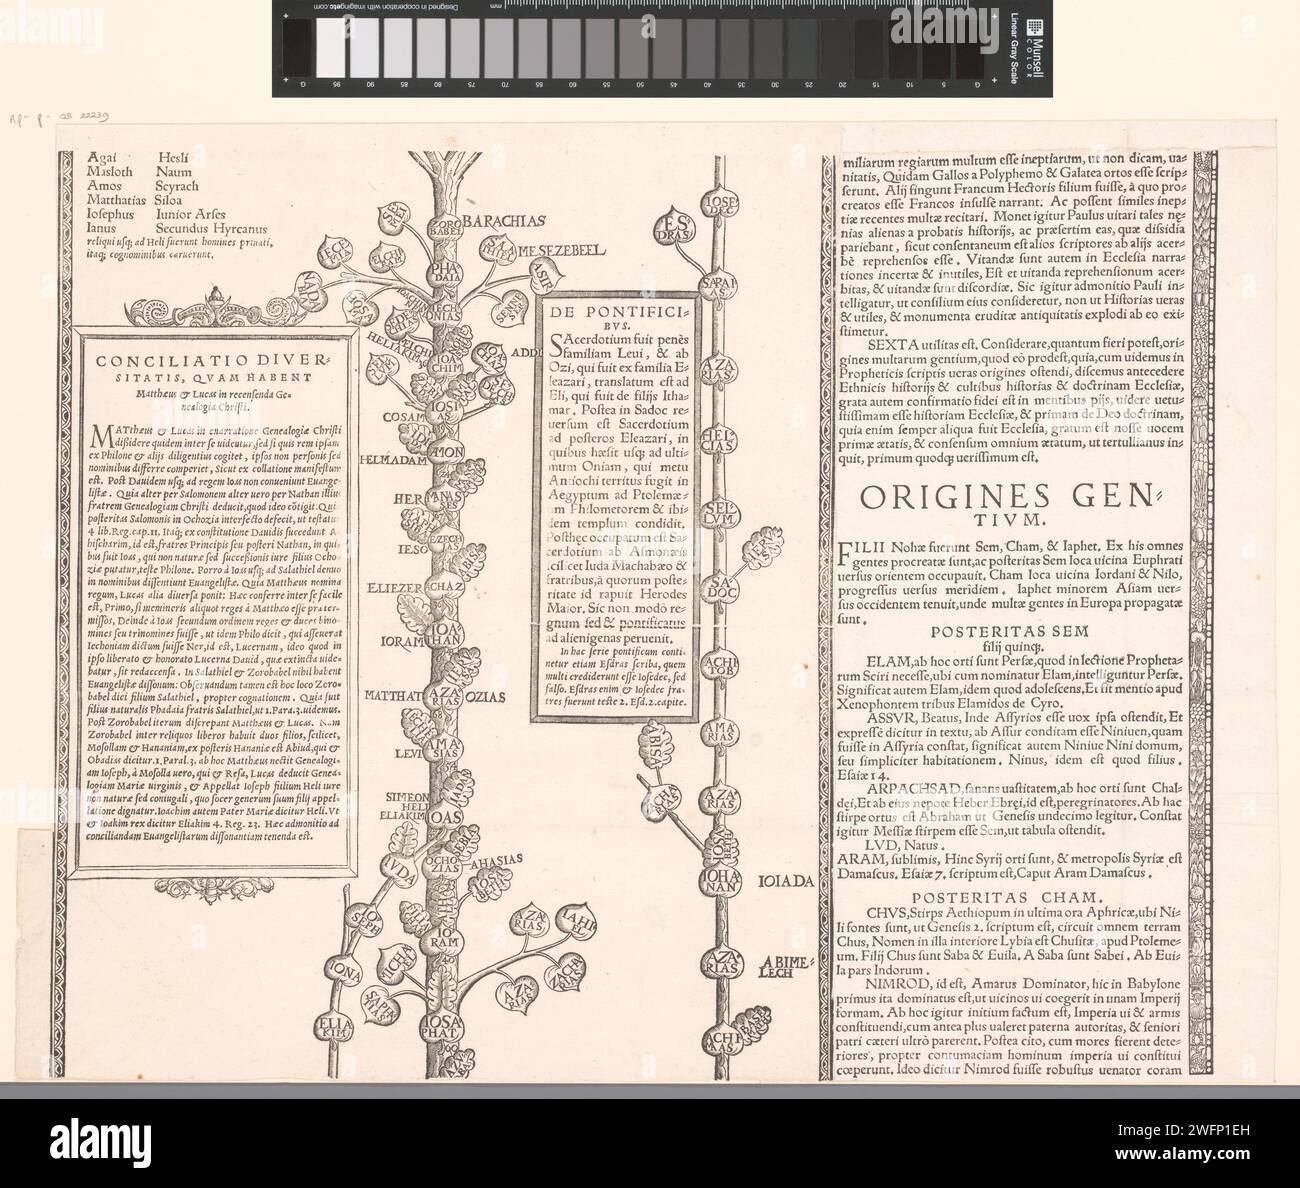 Stamboom van Christus, Tillmann Stella (Possibly), After Tillmann Stella, 1555 print   paper letterpress printing family lineage, pedigree, genealogical tree or table. Christ Stock Photo